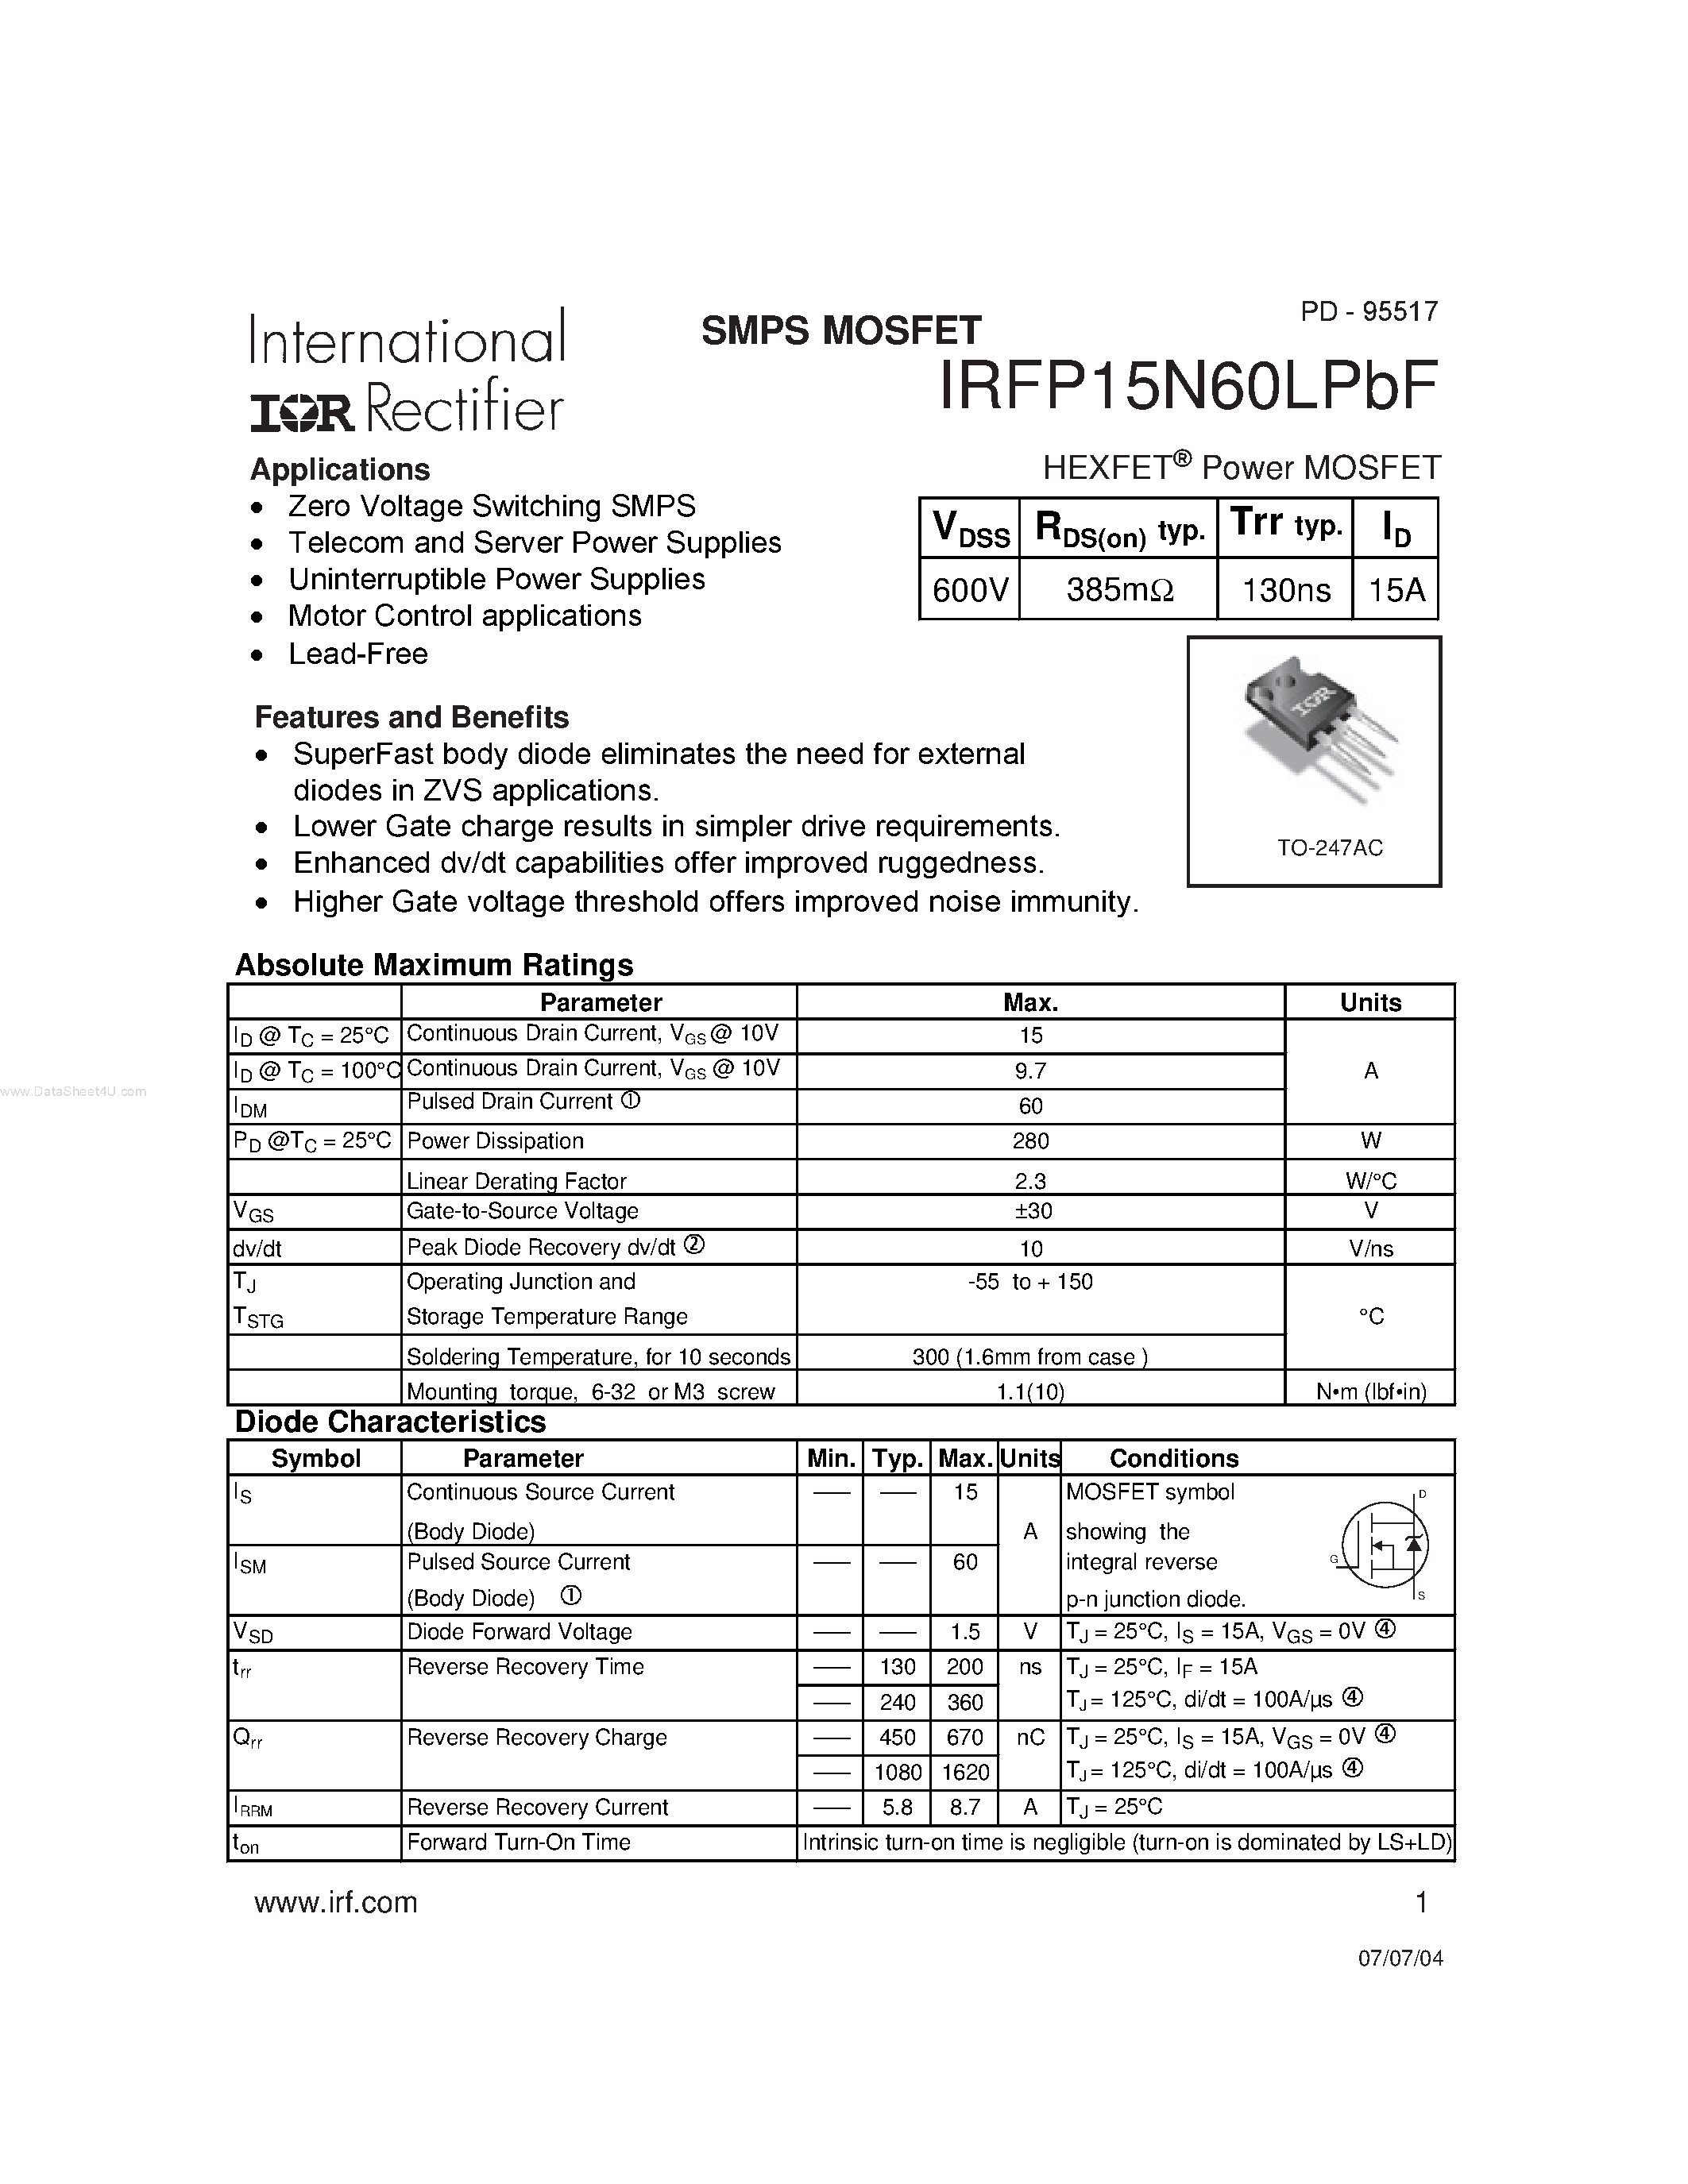 Даташит IRFP15N60LPBF - SMPS MOSFET страница 1